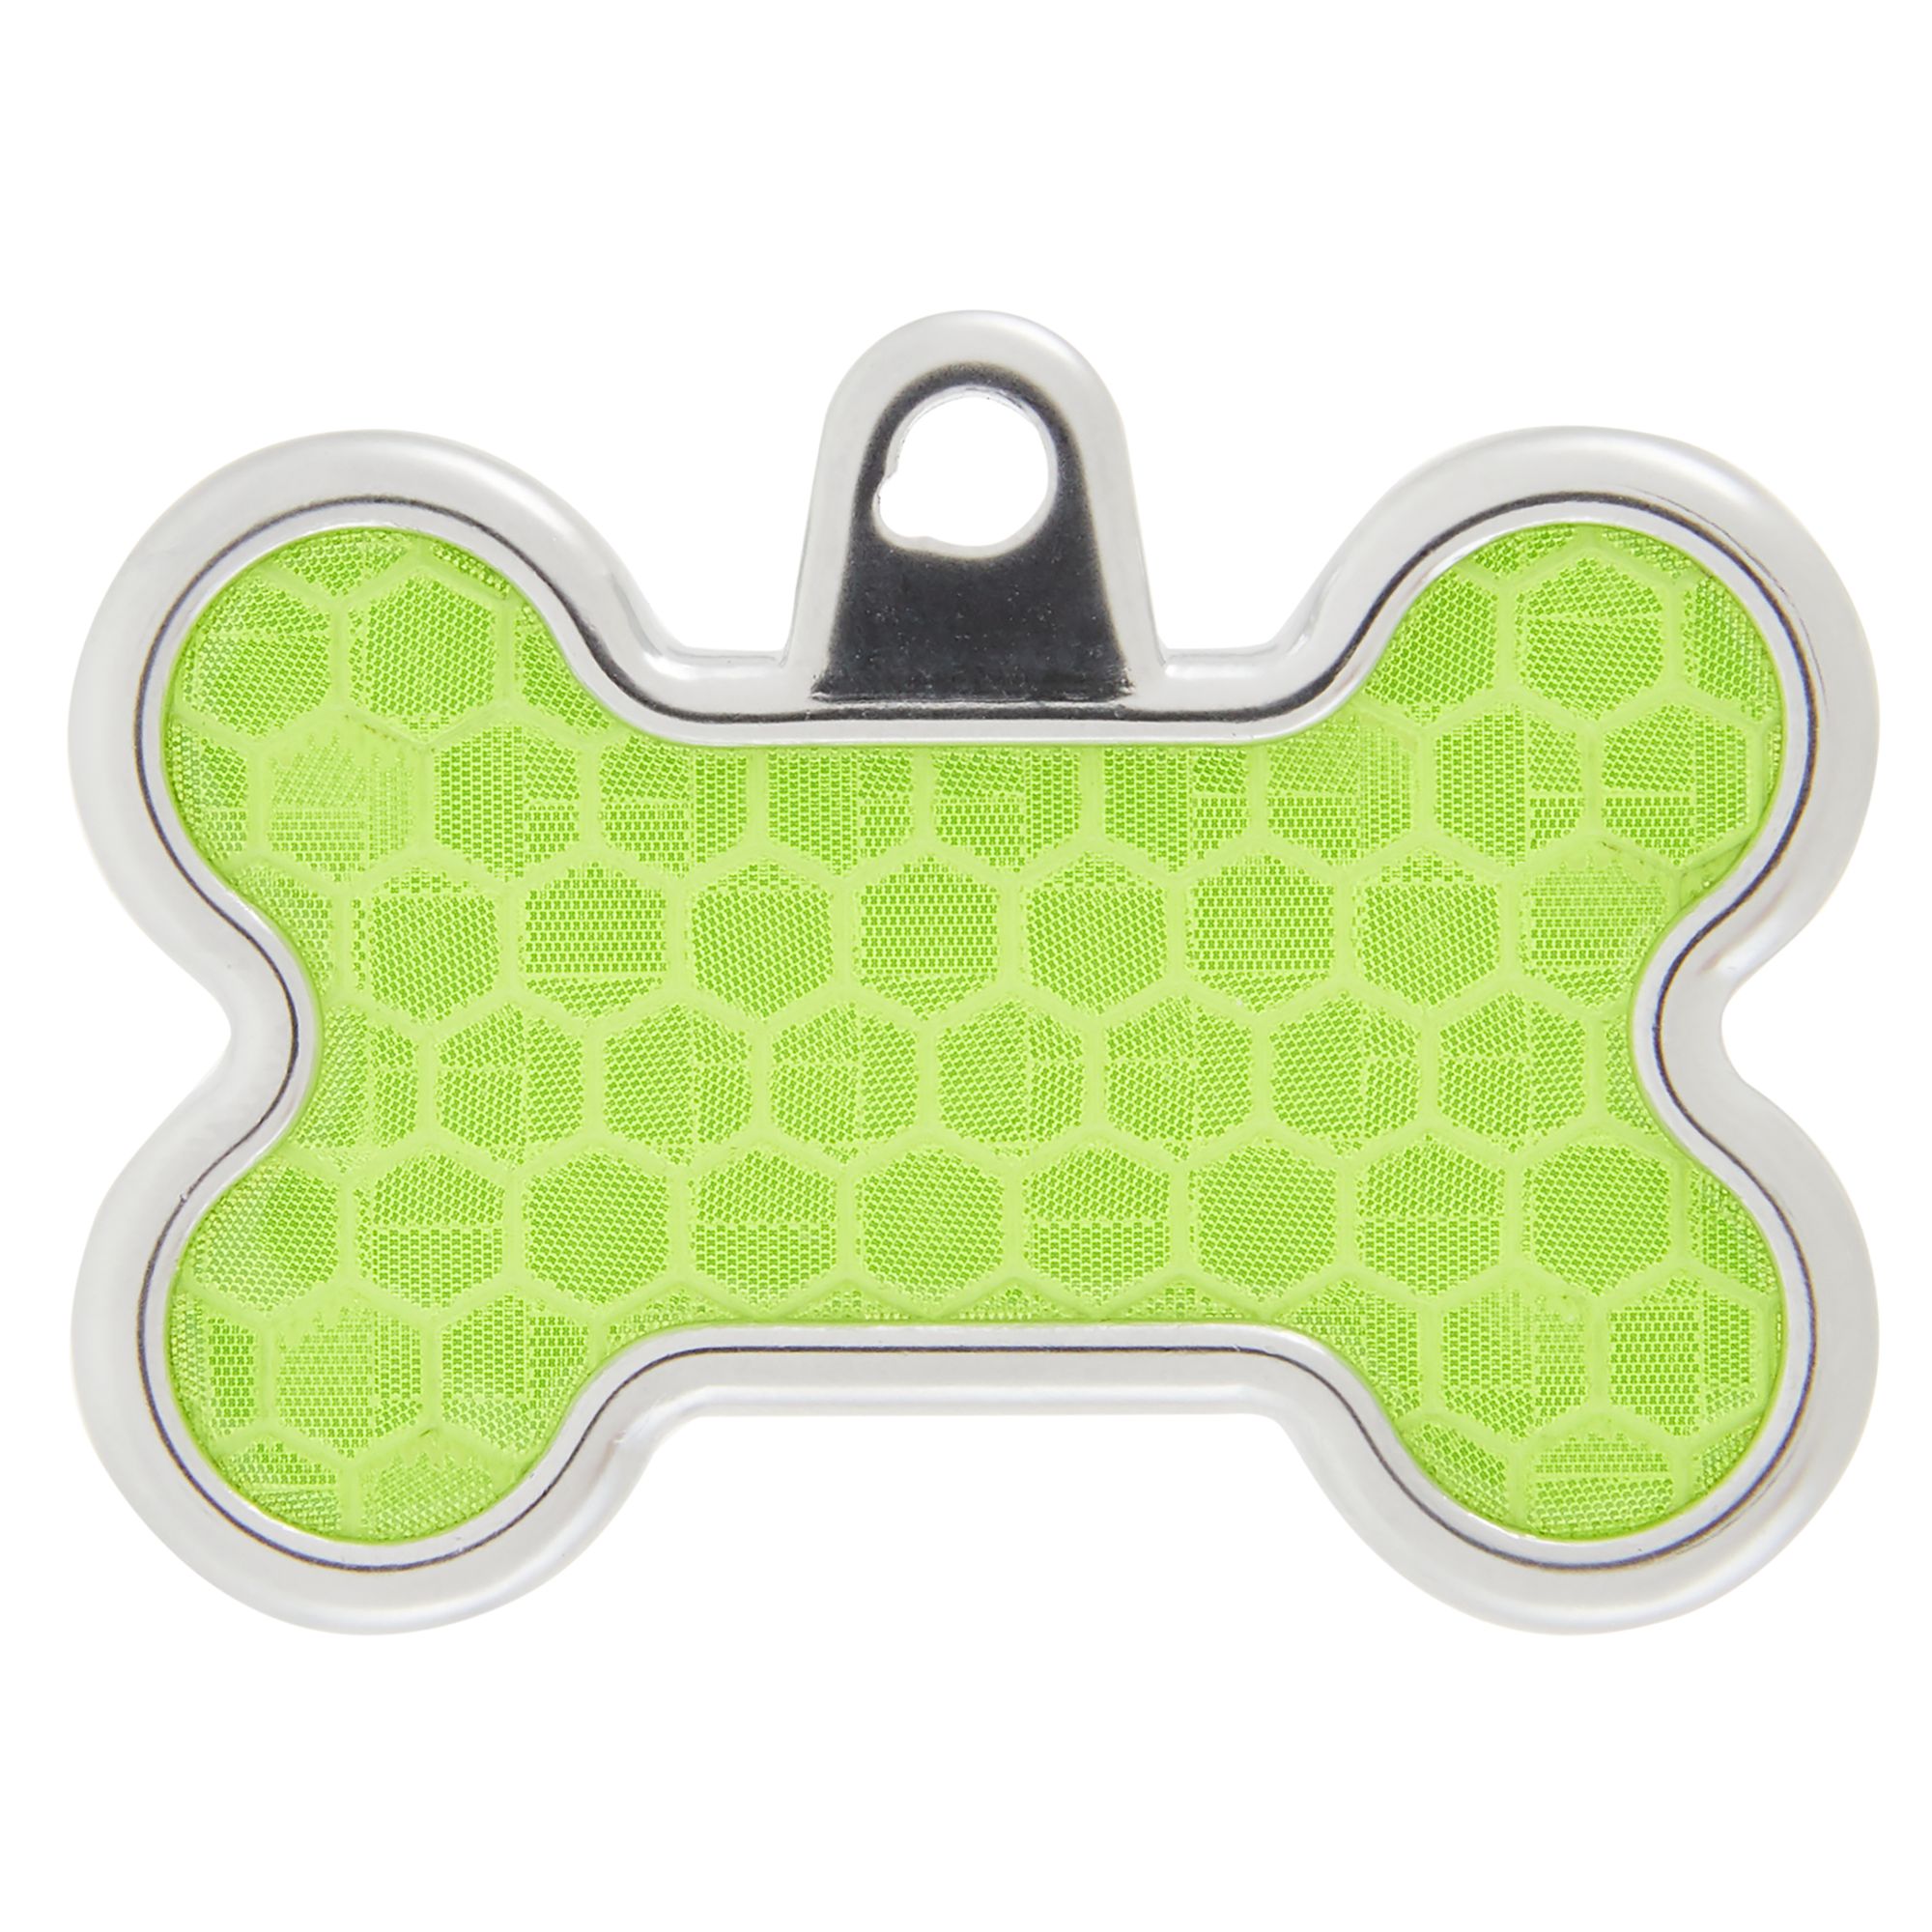 TagWorks Reflective Bone Personalized Pet ID Tag in Green | PetSmart